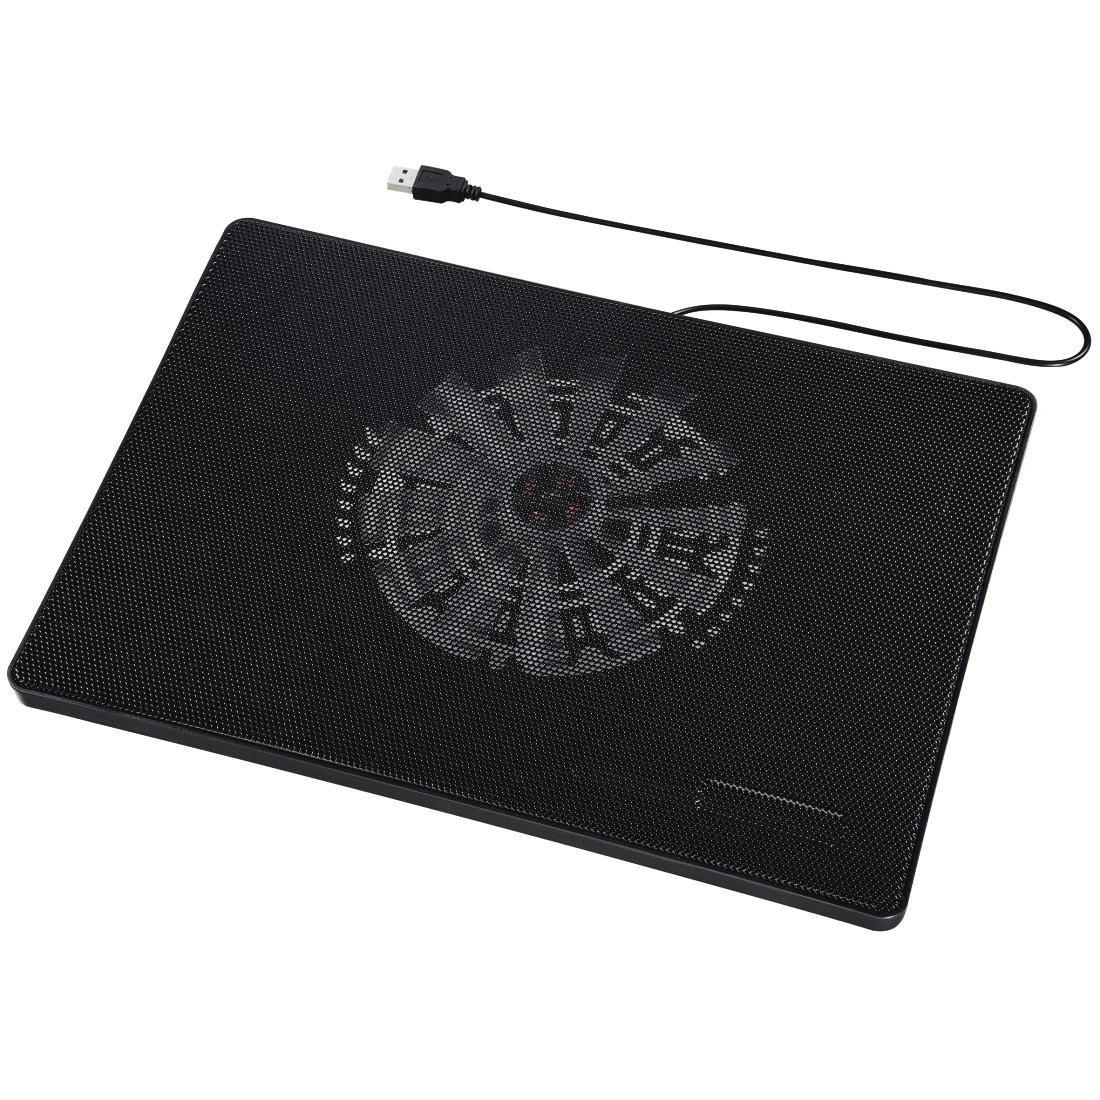 Hama 00053067 Slim Notebook Cooler, black